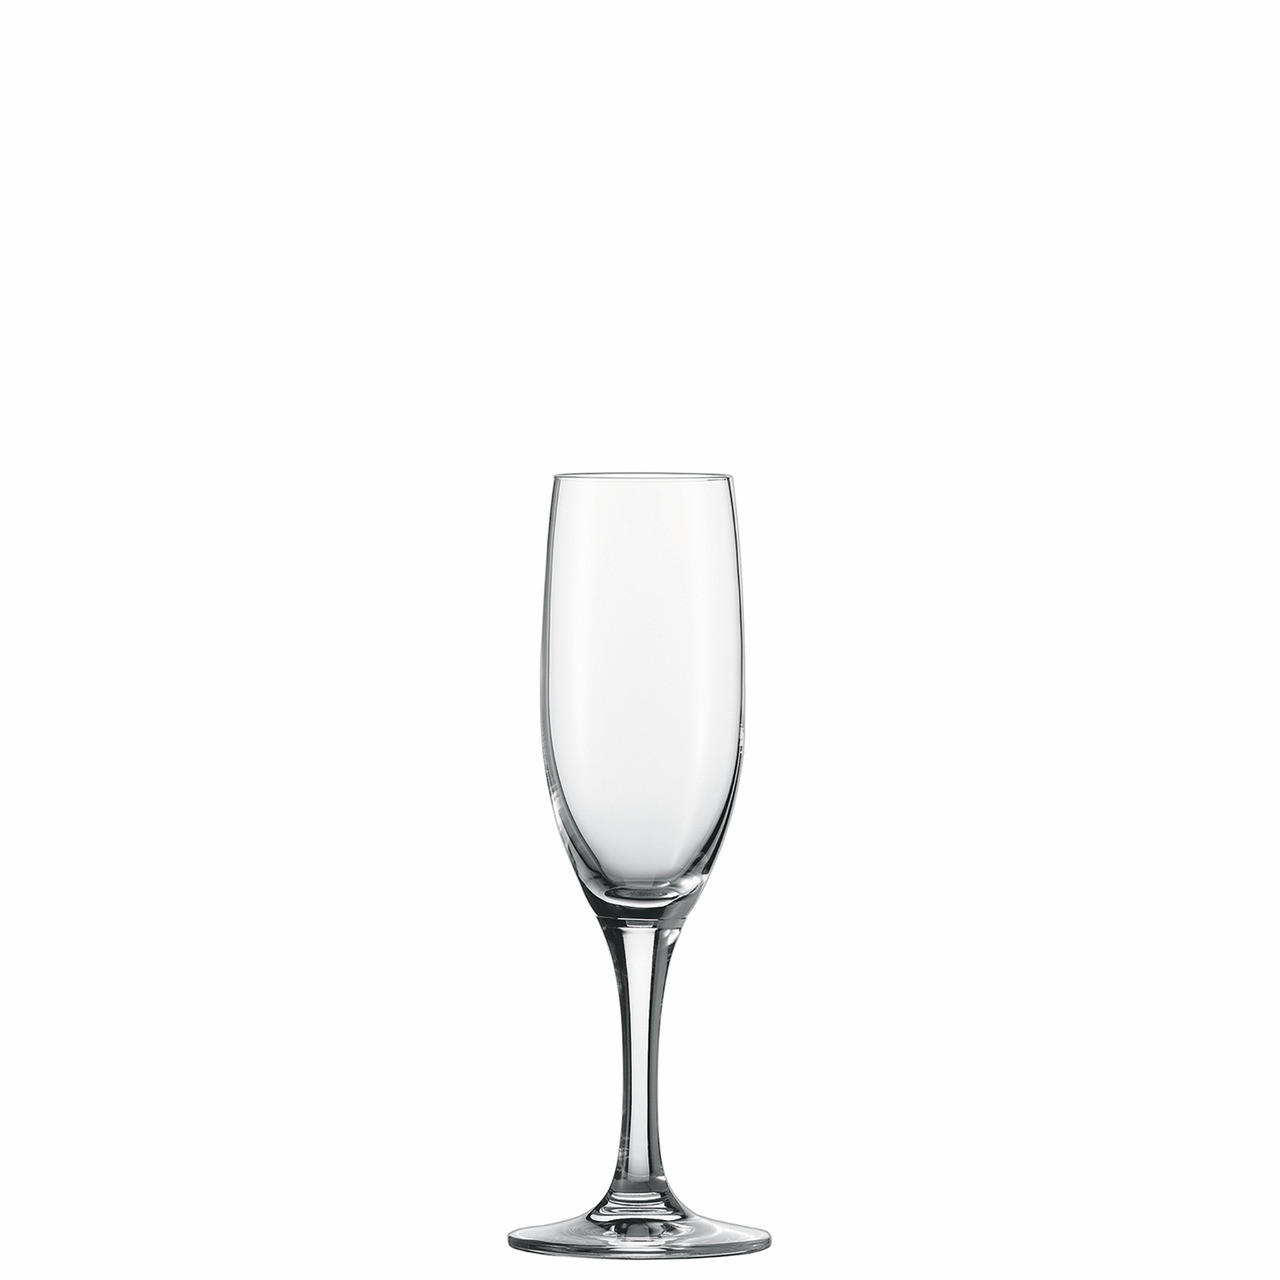 Mondial, Sekt- / Champagnerglas ø 72 mm / 0,21 l